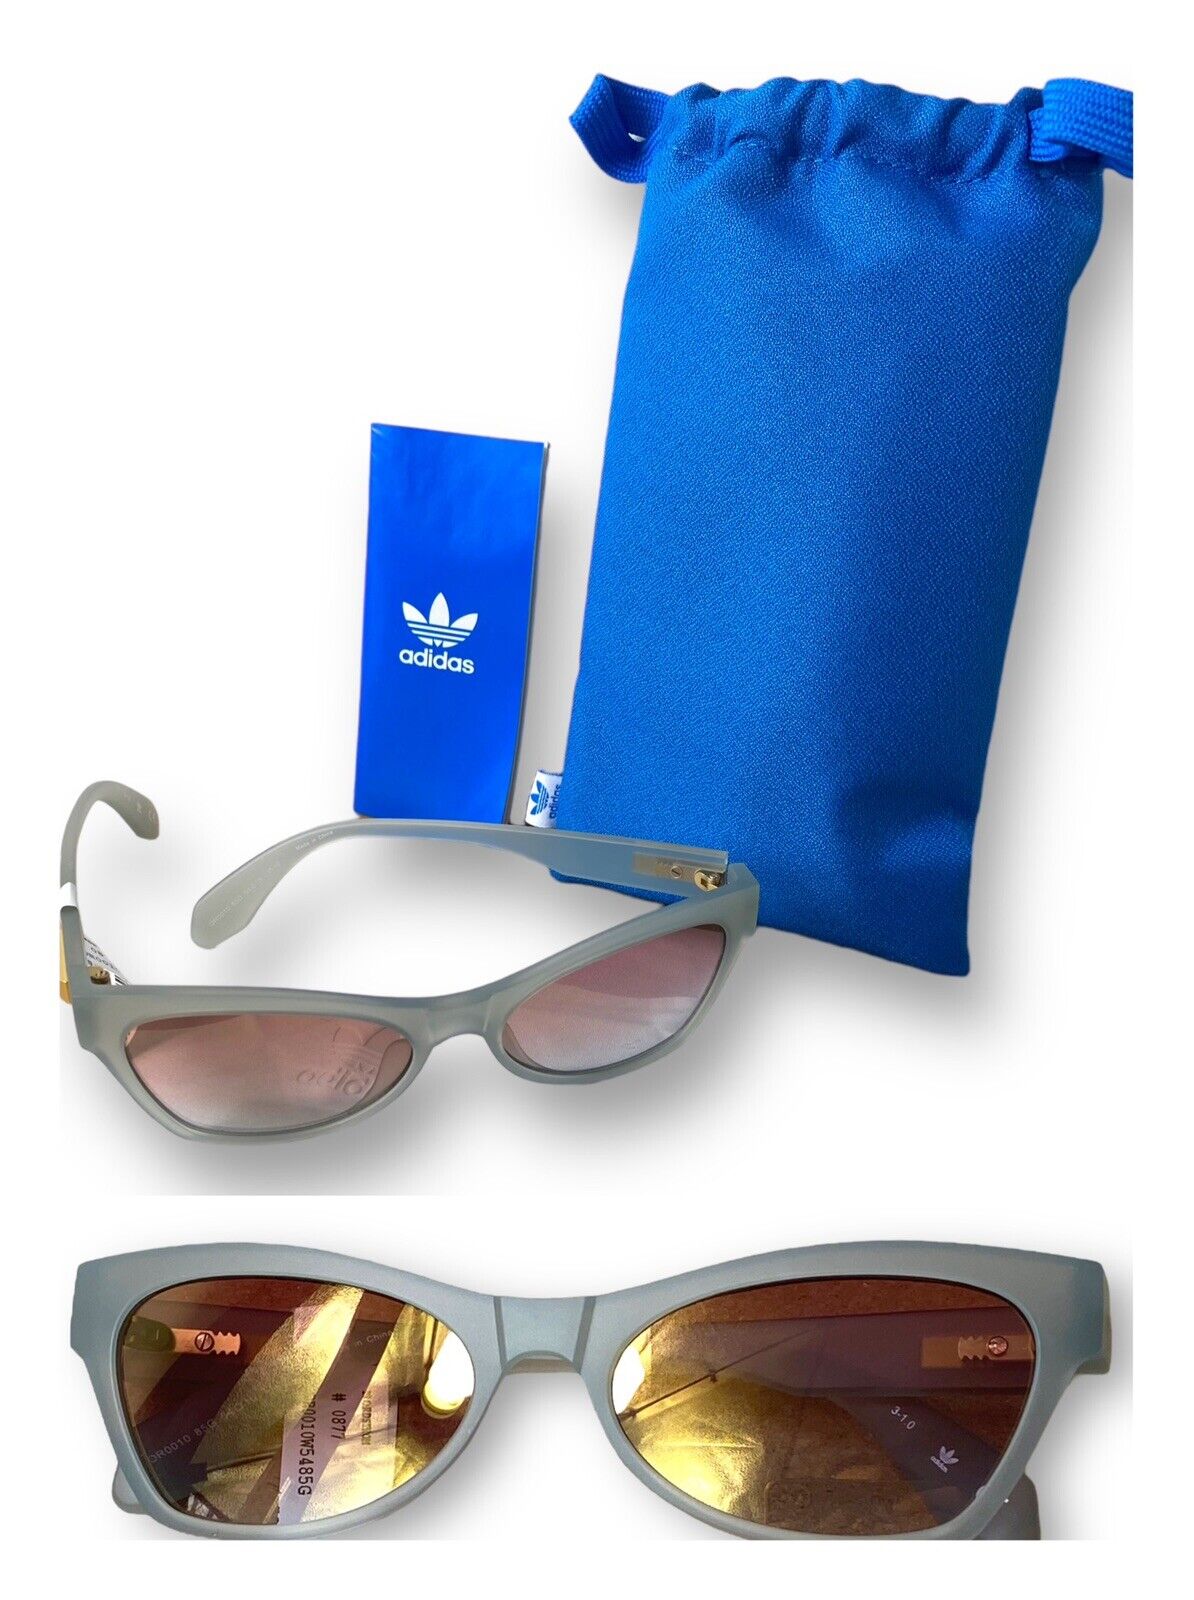 Adidas Originals Butterfly Sunglasses Frosted Light Blue Frames 54mm Mirror Lens